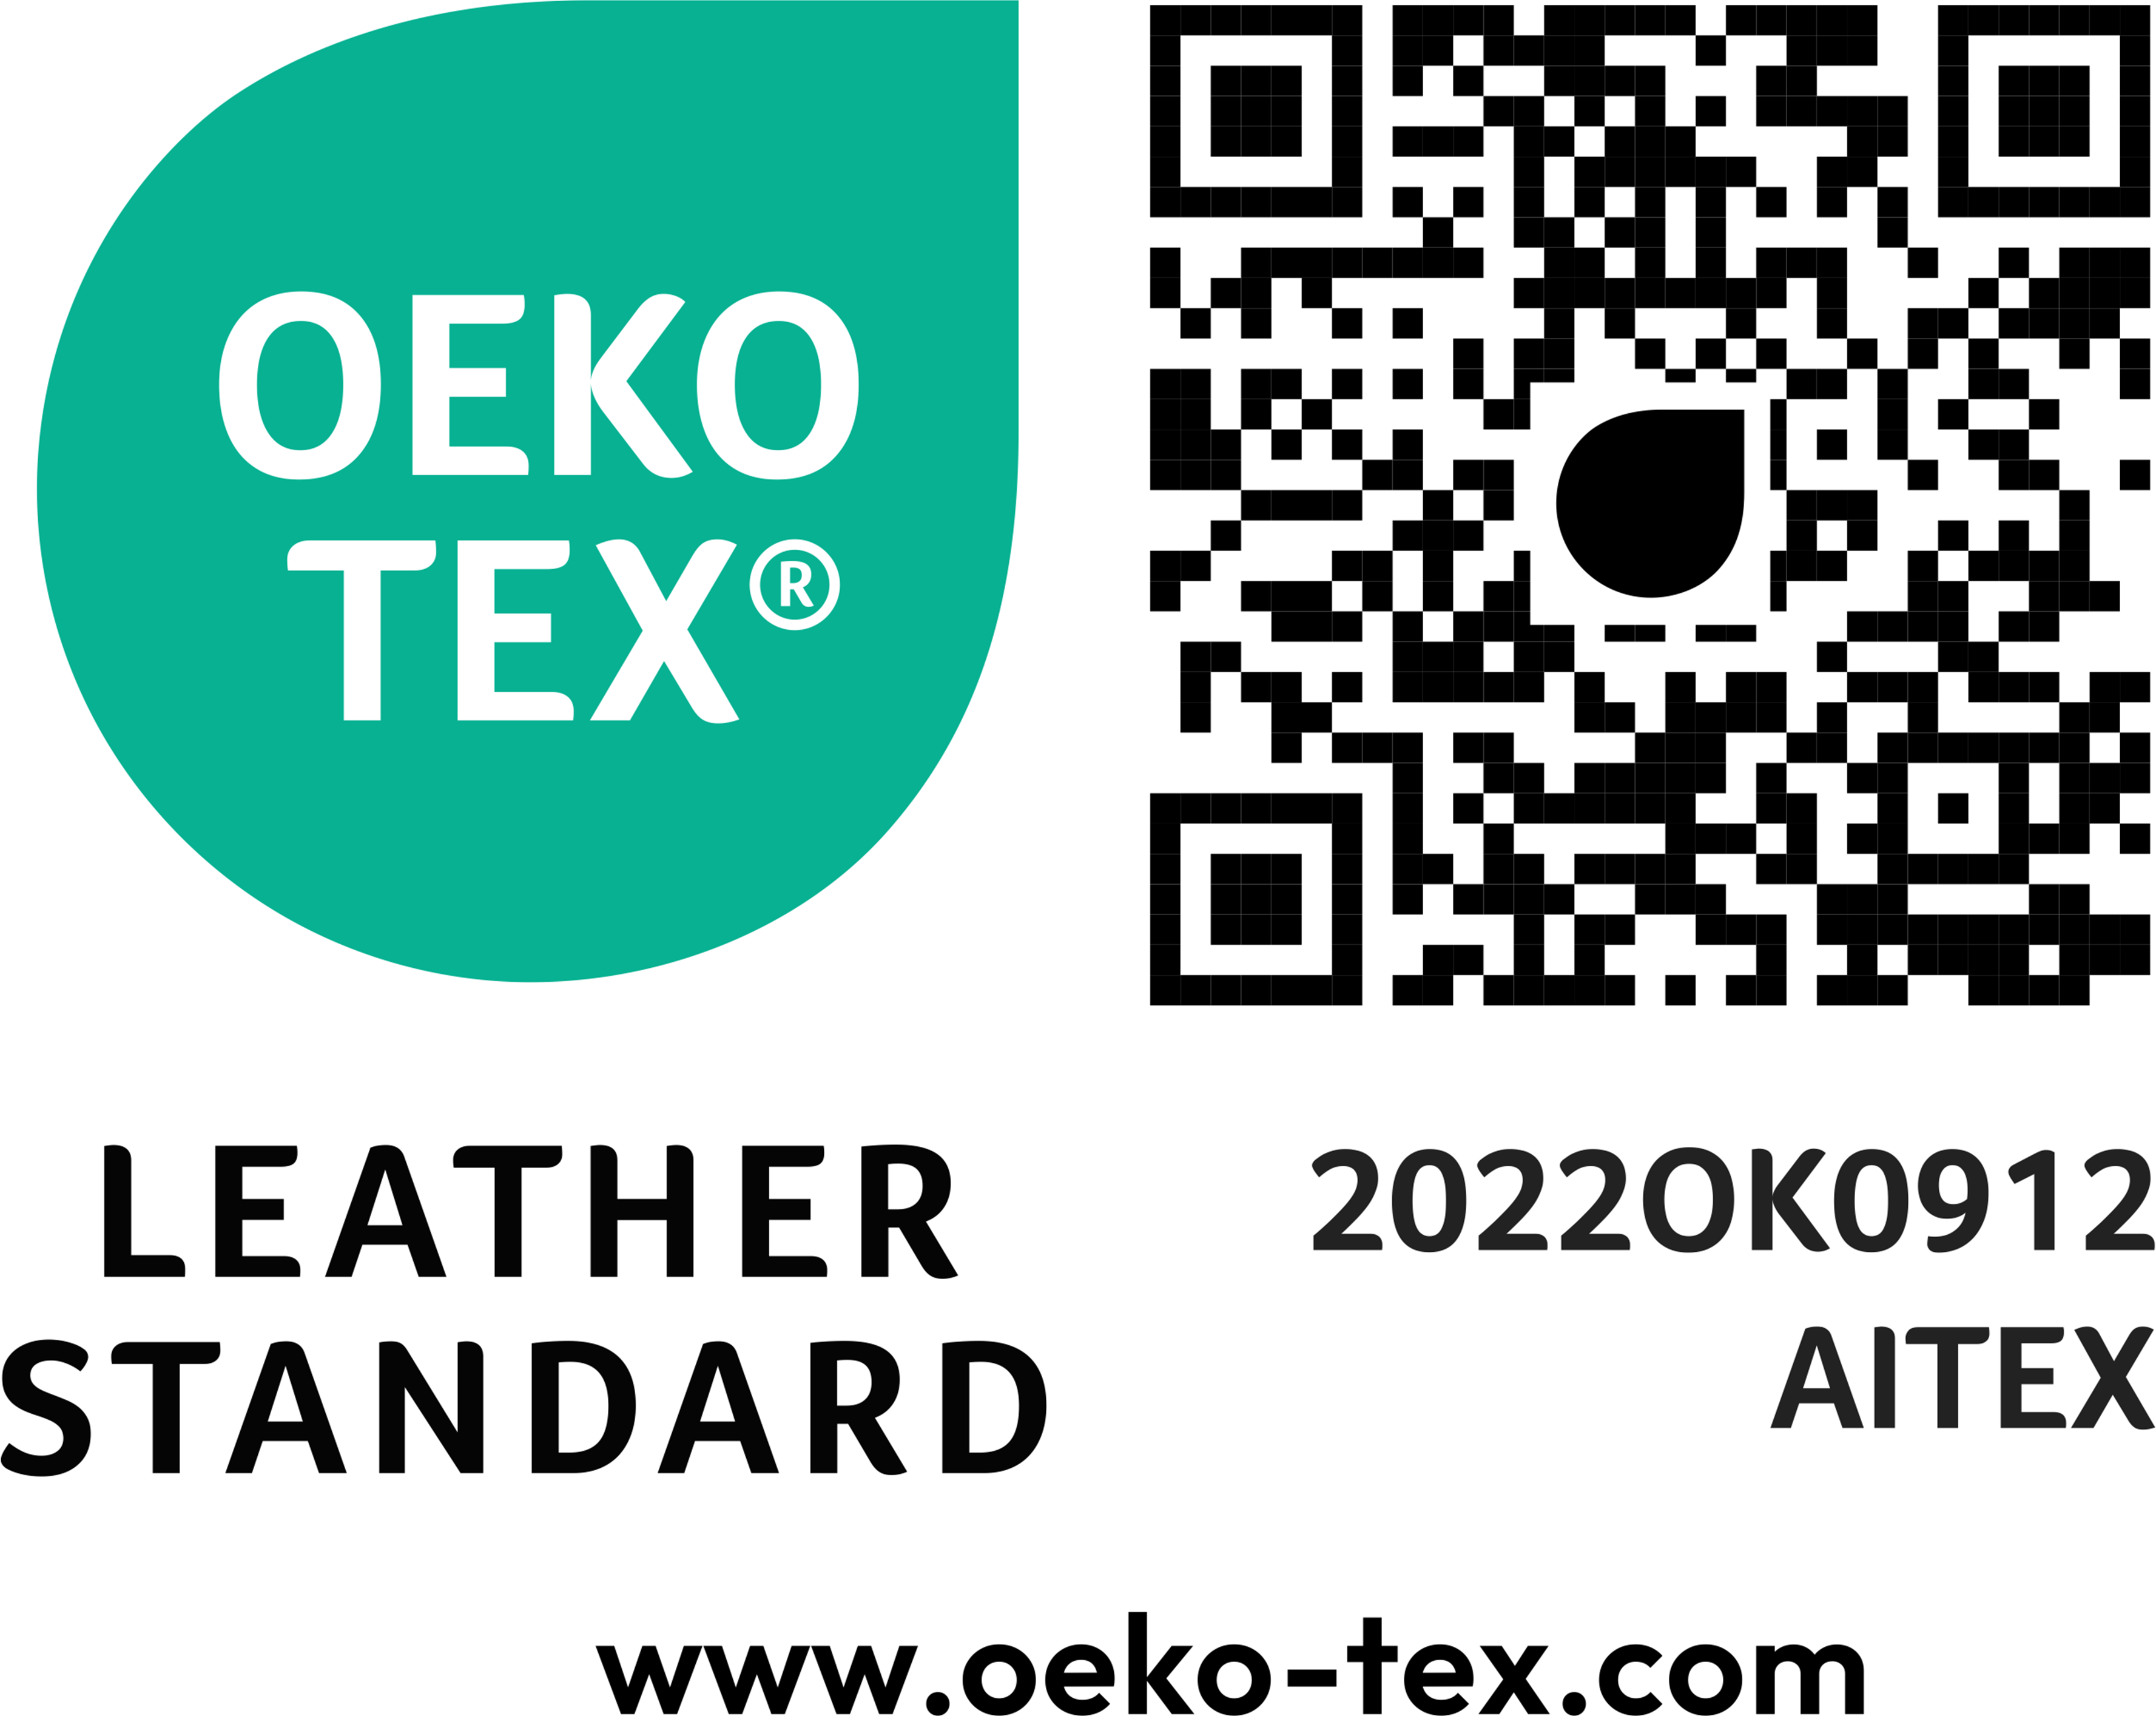 Oeko-Tex Leather Standard